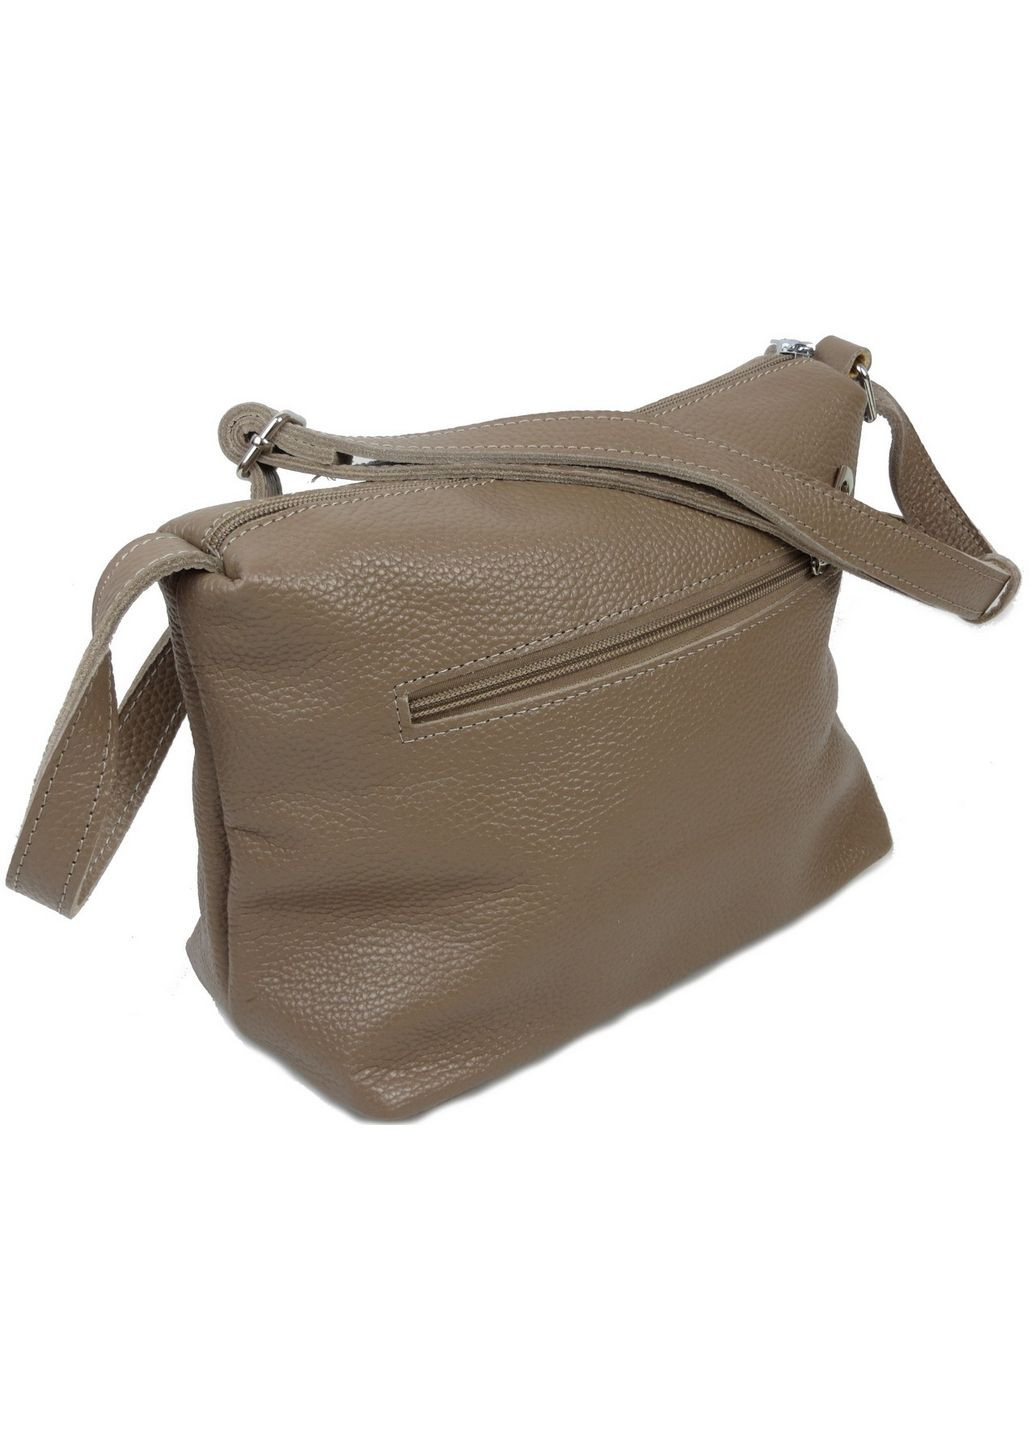 Женская кожаная сумка Wallaby (282594282)